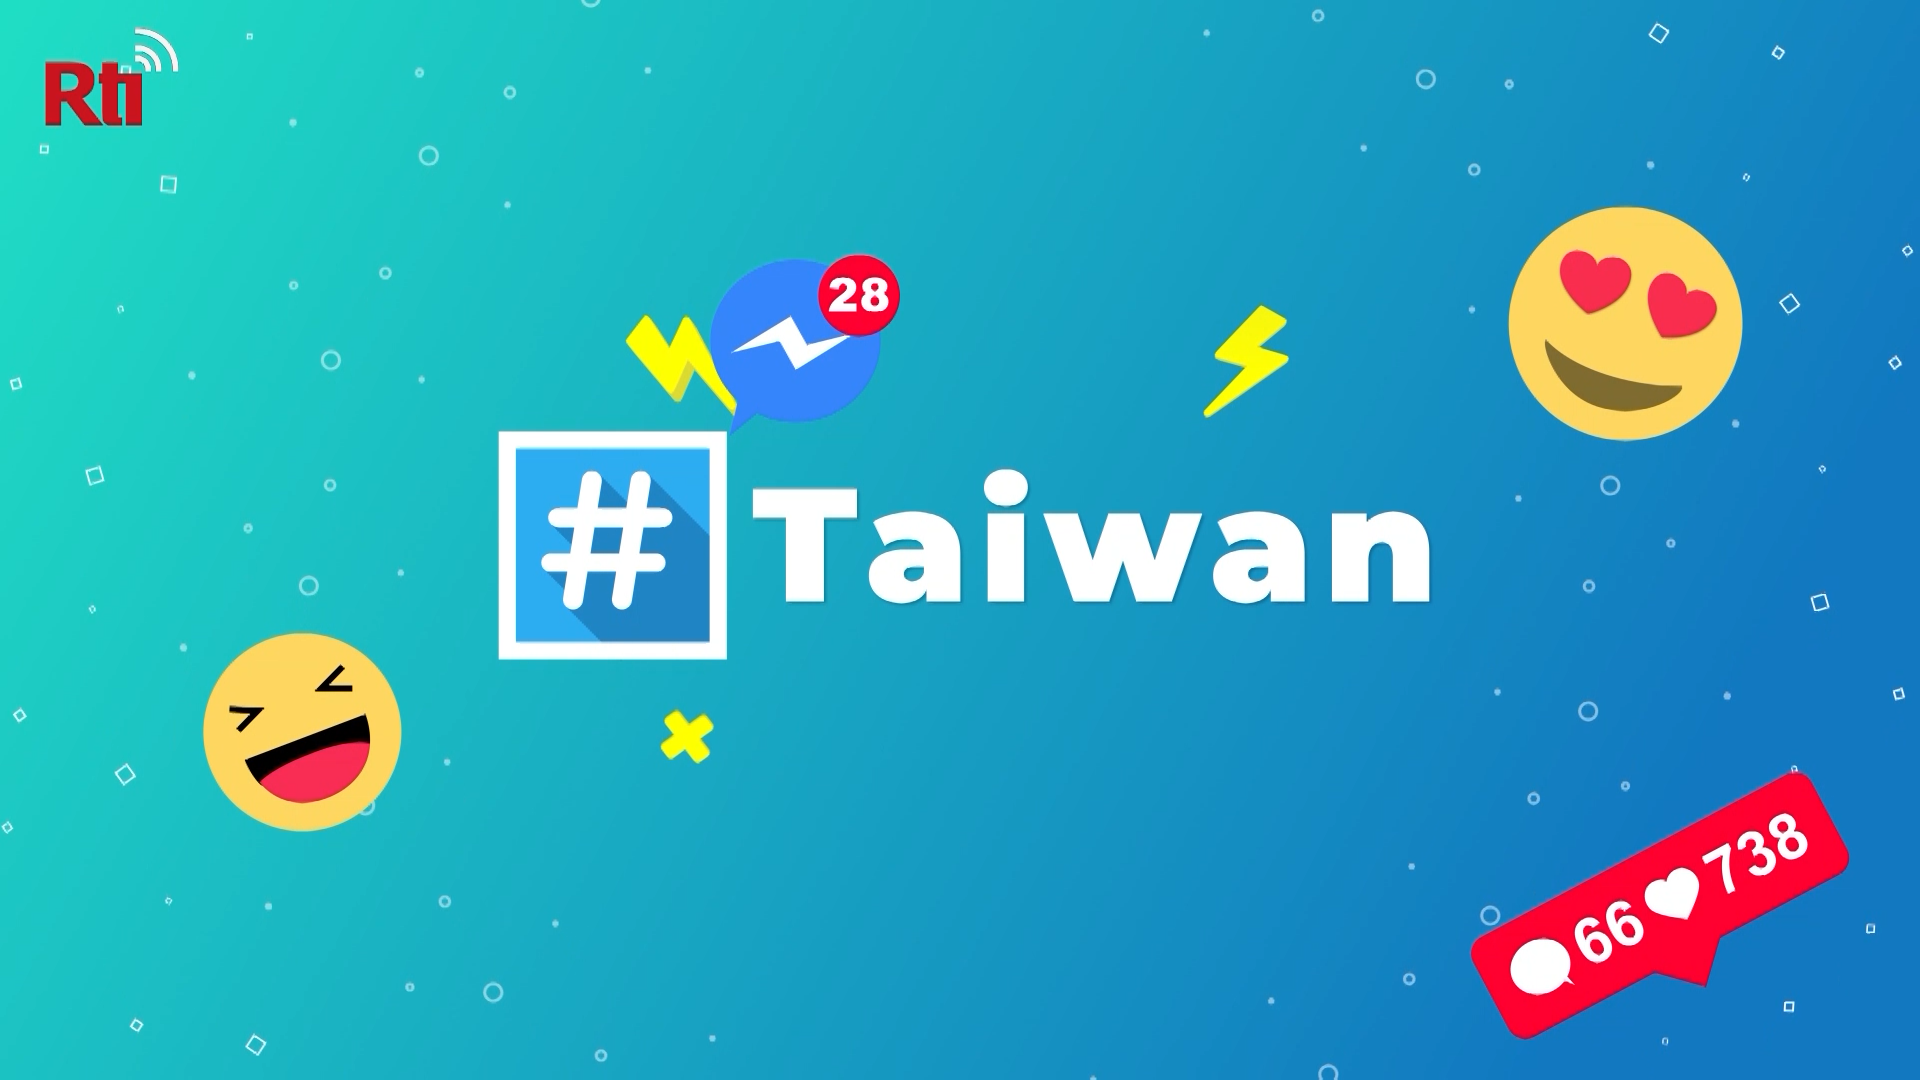 Hashtag Taiwan